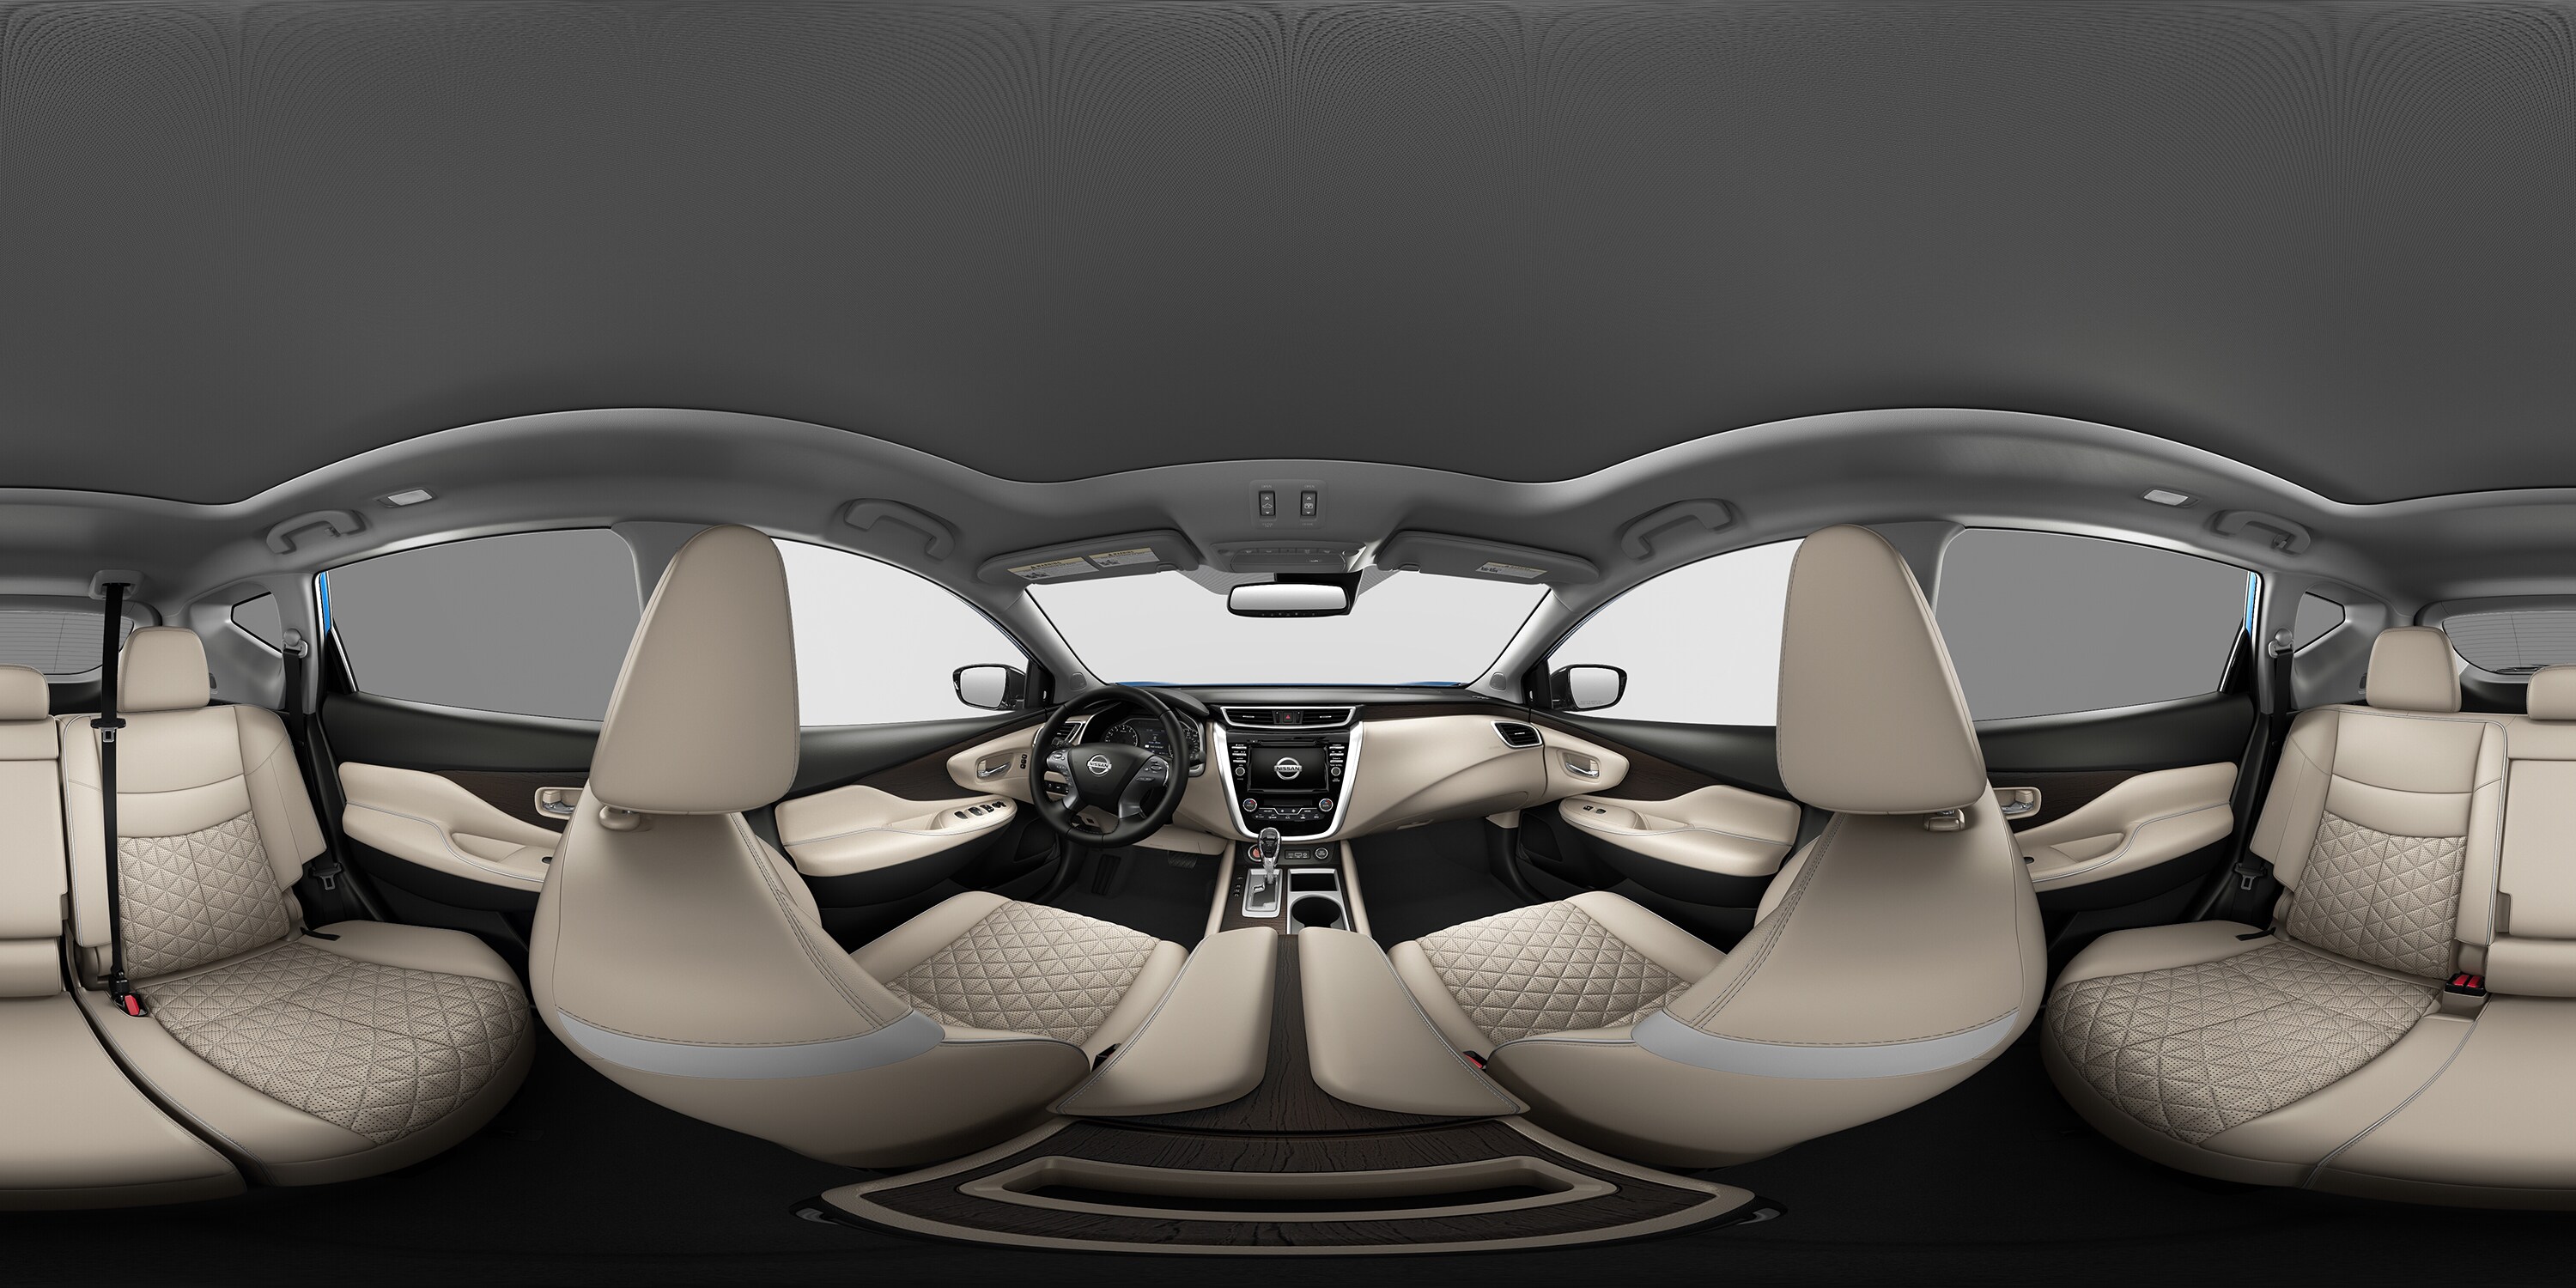 2022 Nissan Murano Platinum interior showing Cashmere semi-aniline leather